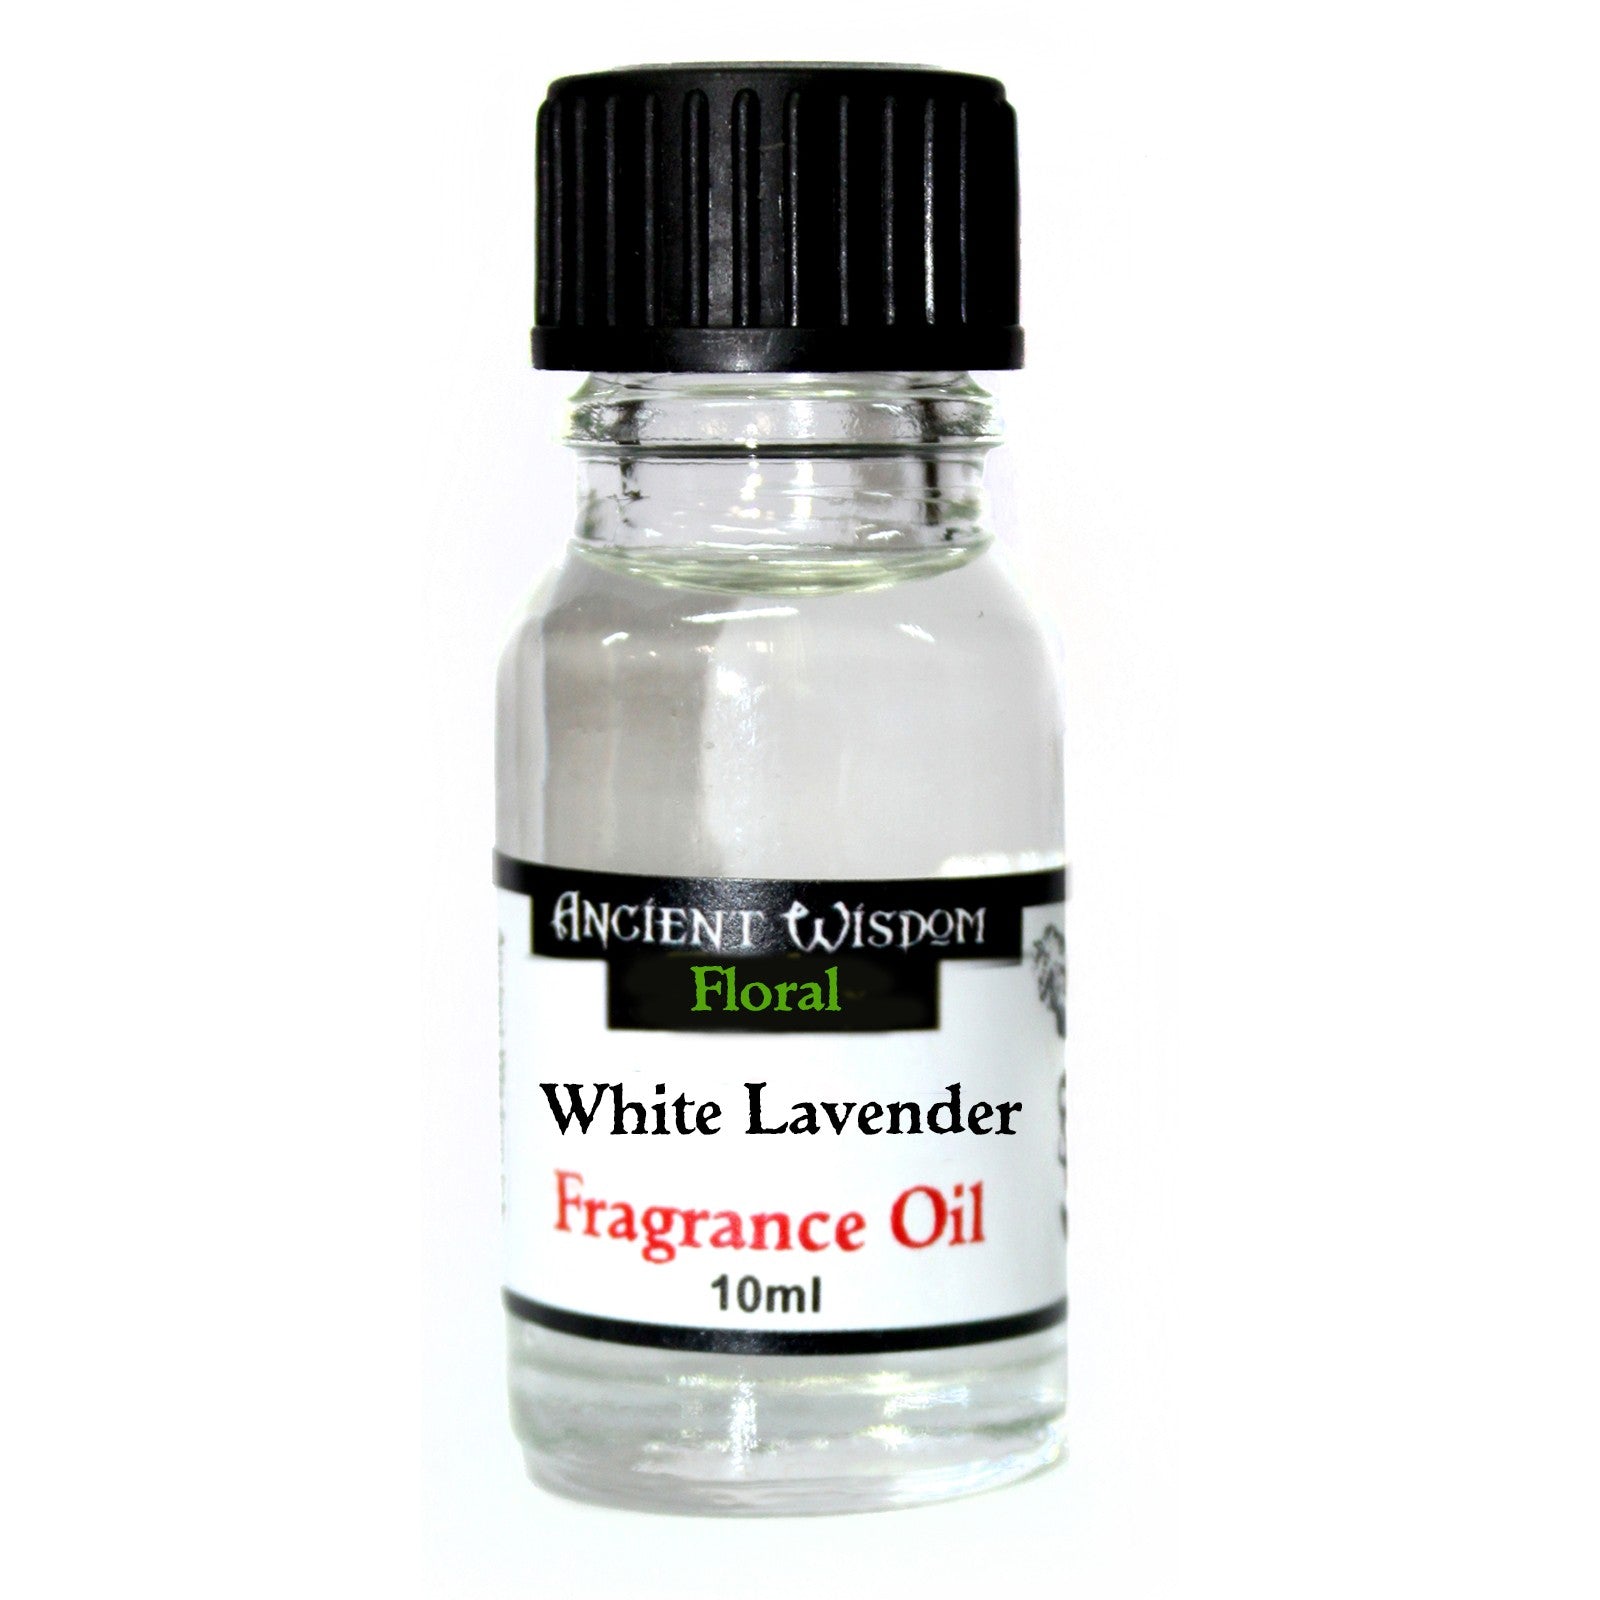 View 10ml White Lavender Fragrance Oil information